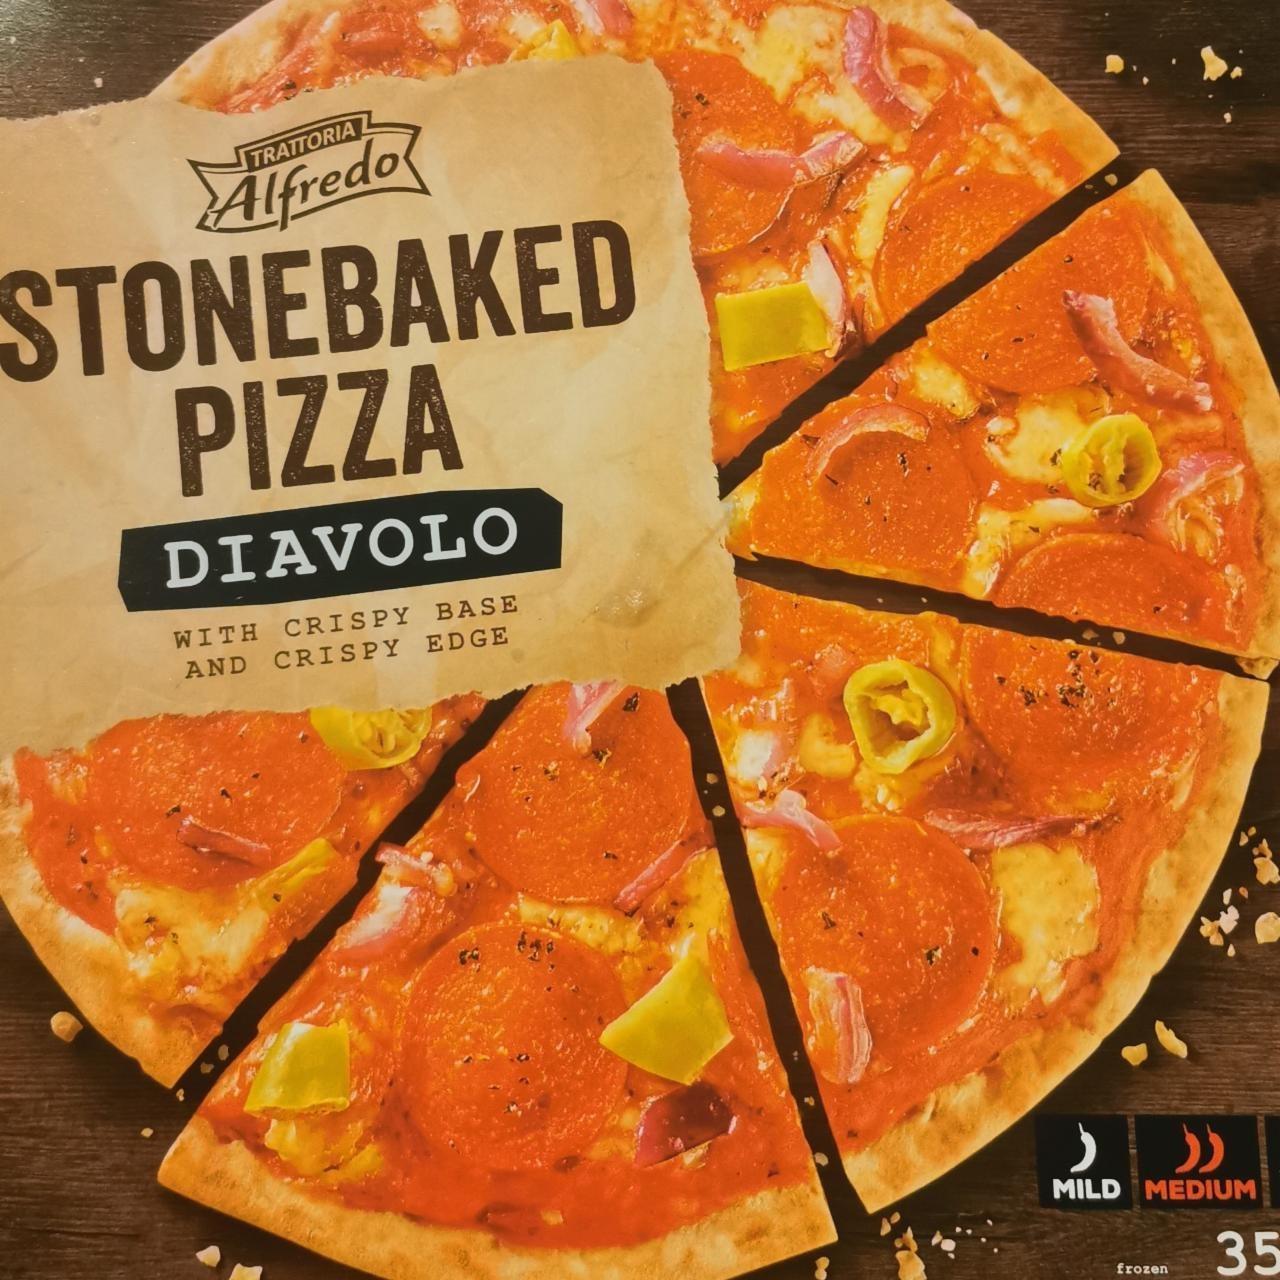 Képek - Stonebaked pizza Diavolo Trattoria Alfredo